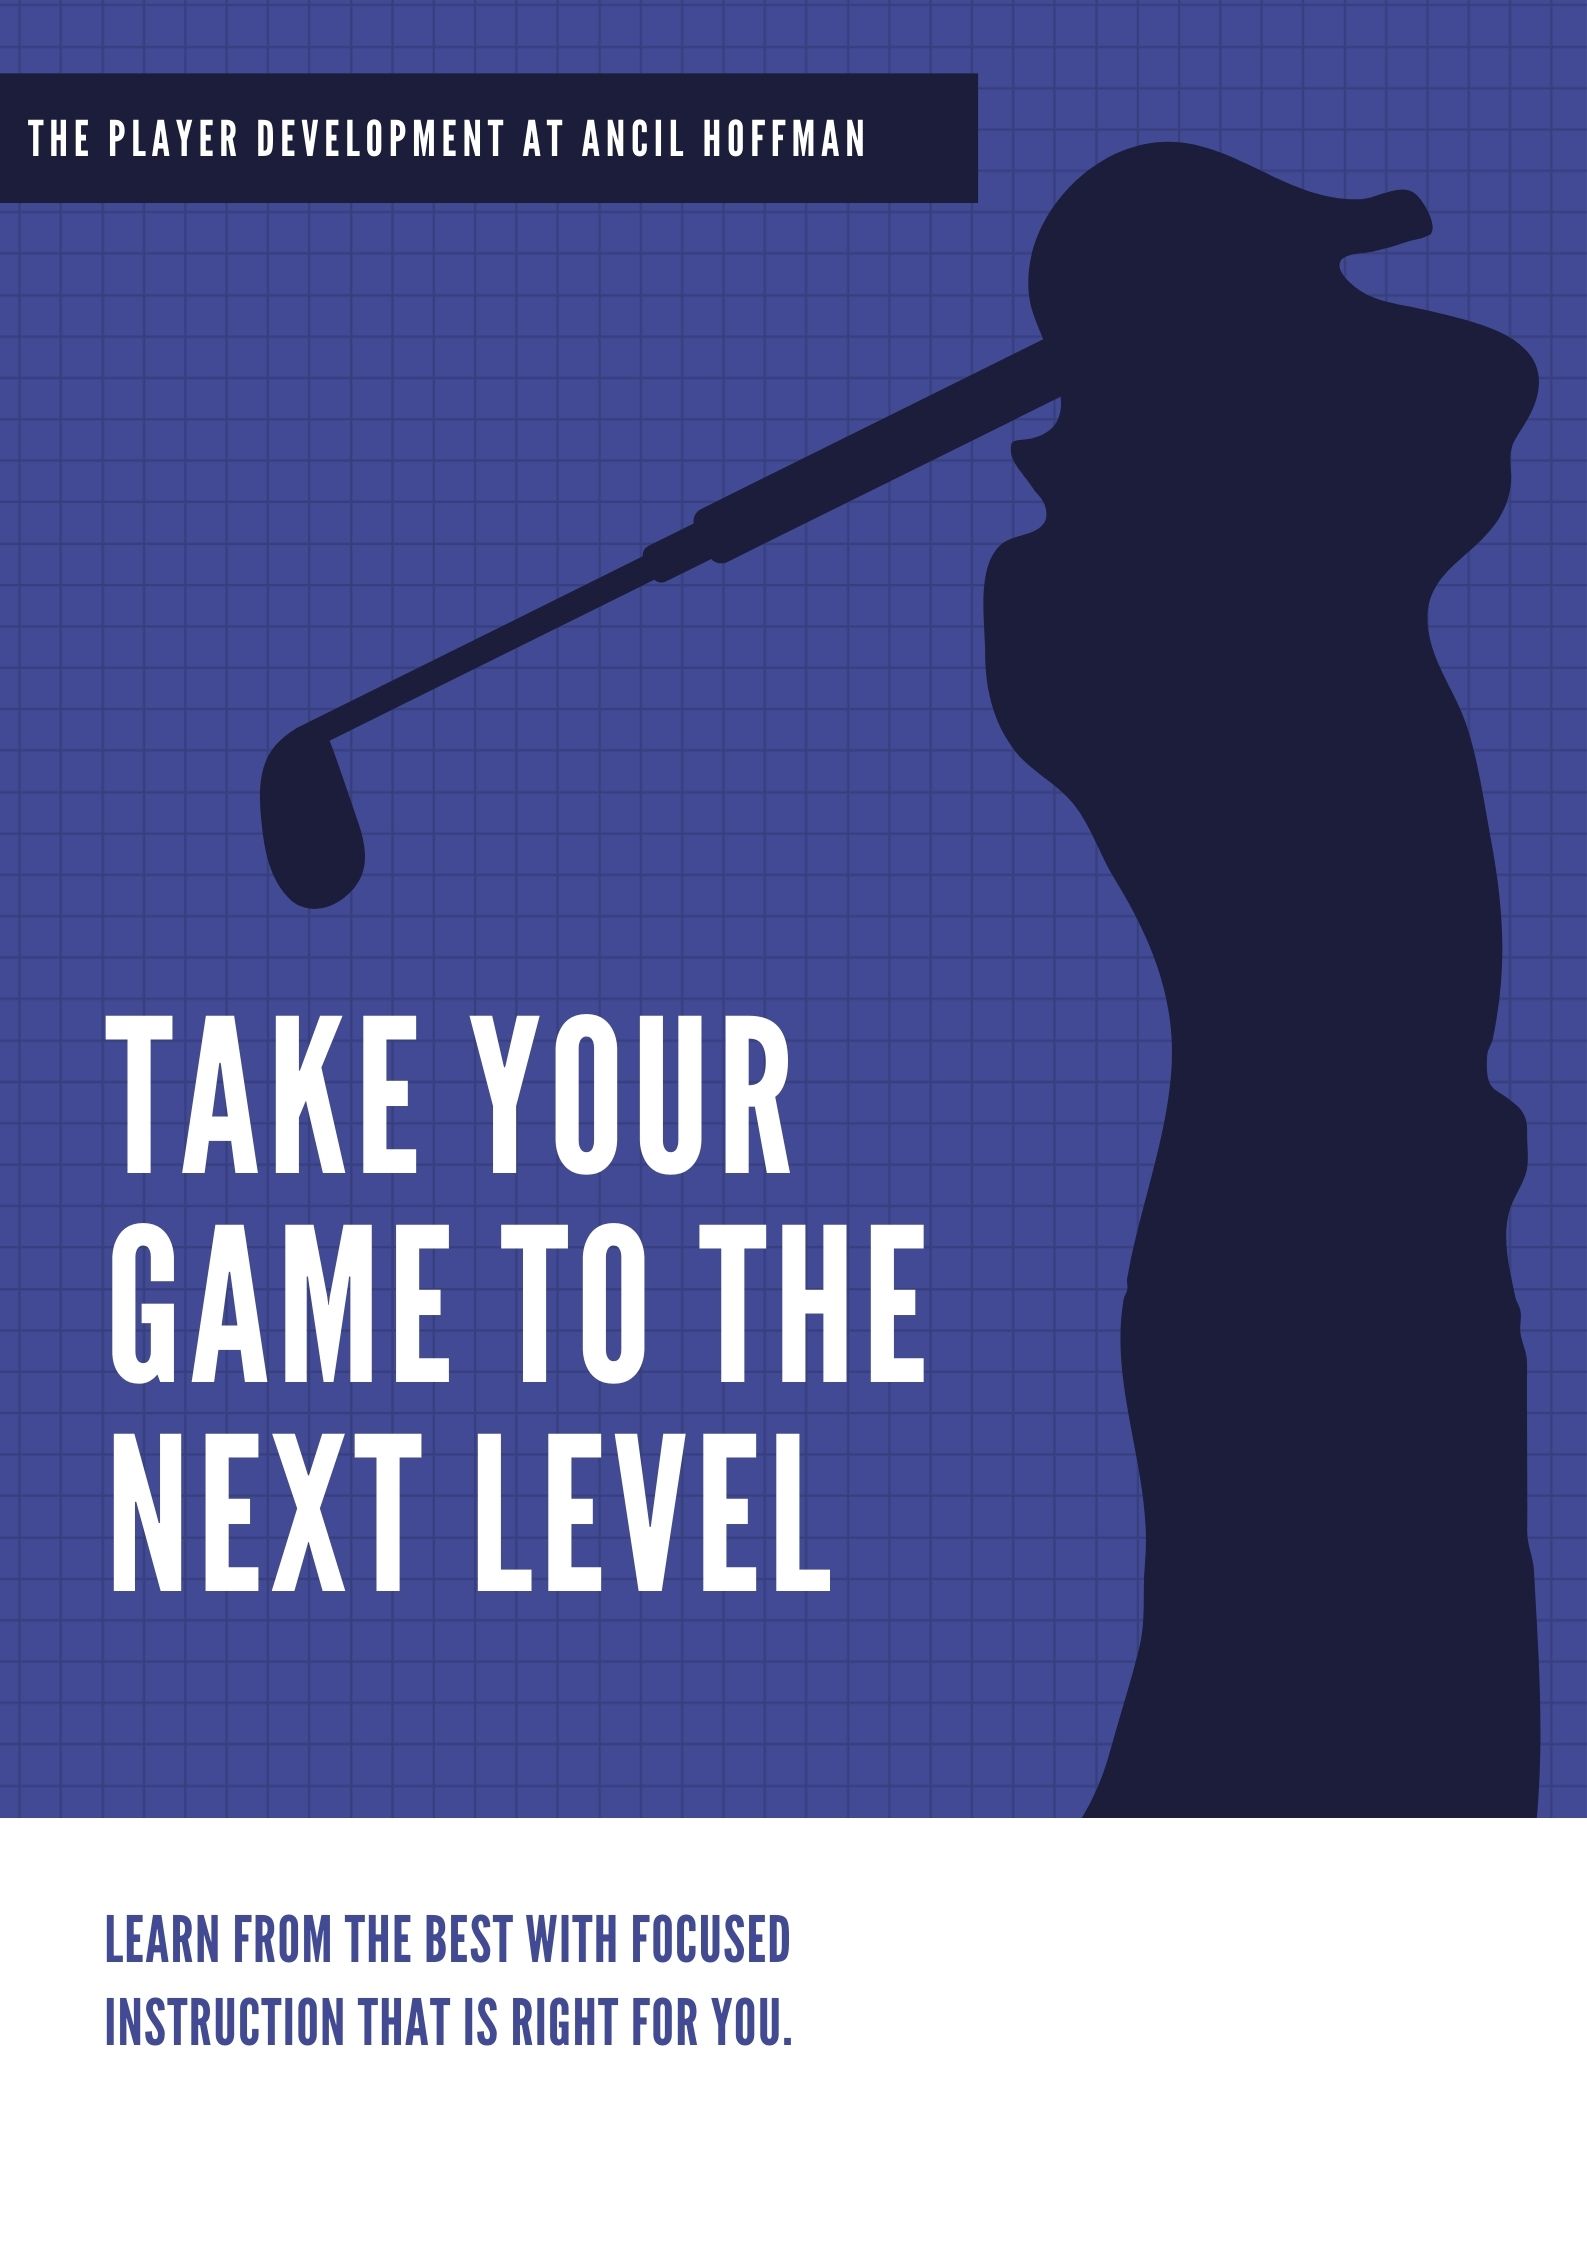 Generic Golf Instruc Image flyer call kfitz